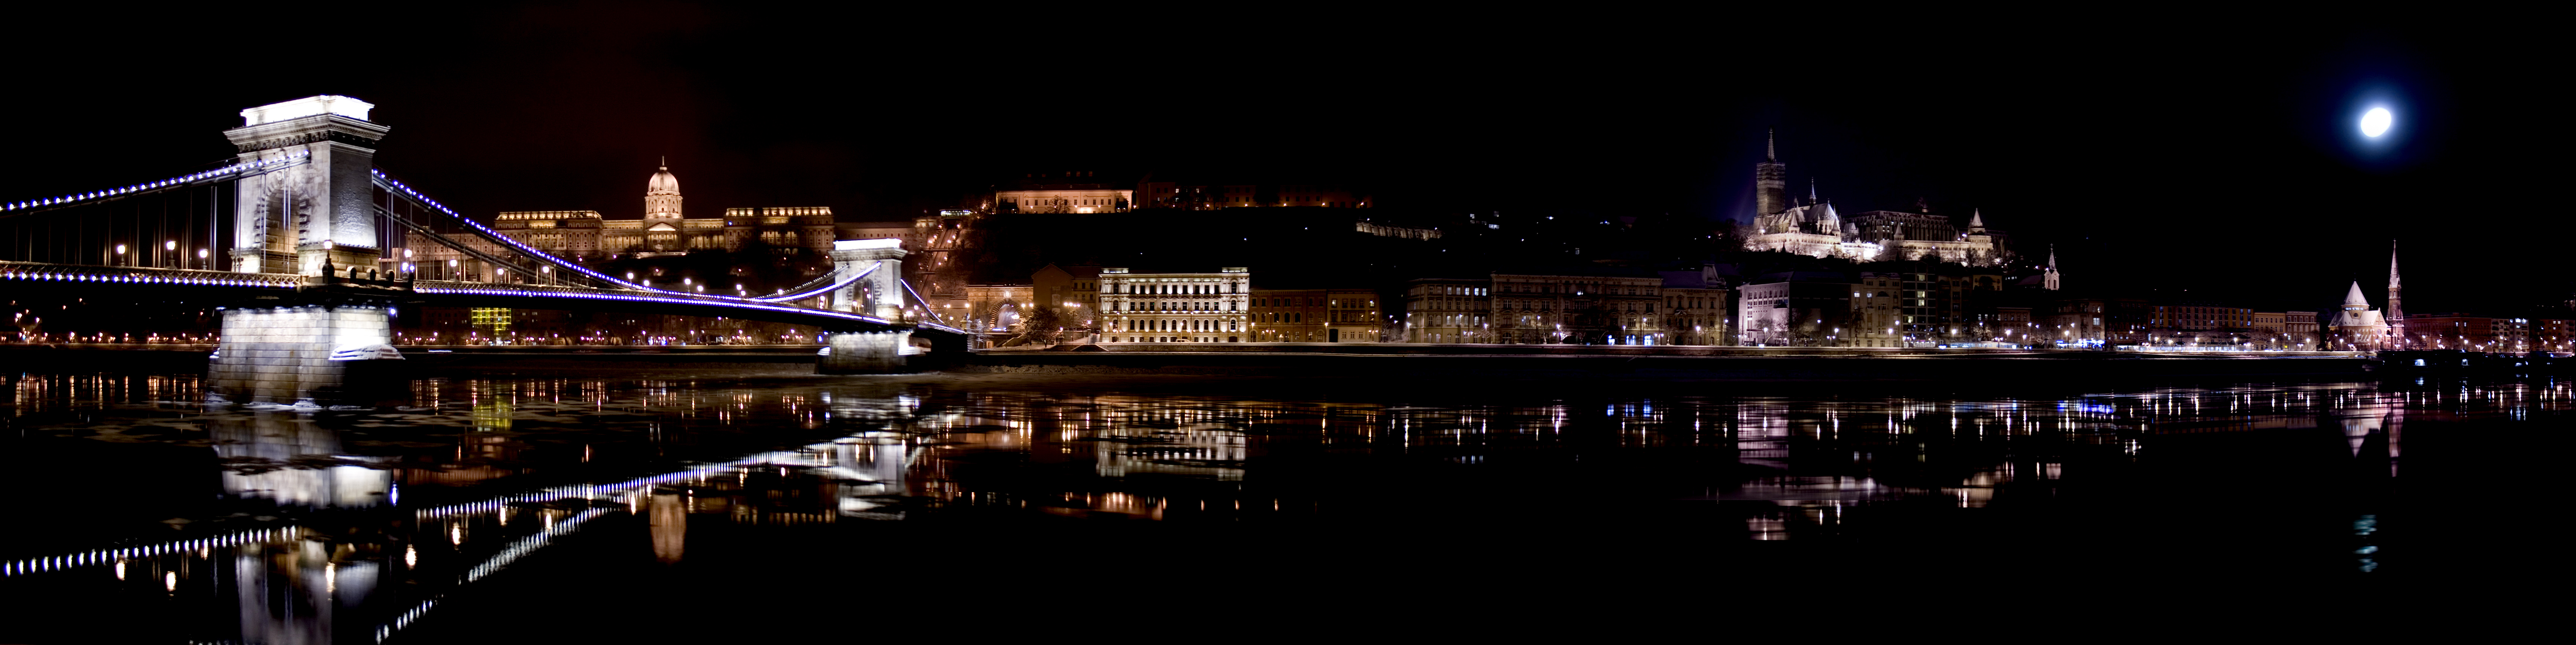 Budapest panorama by night | Budapest | Pinterest | Budapest